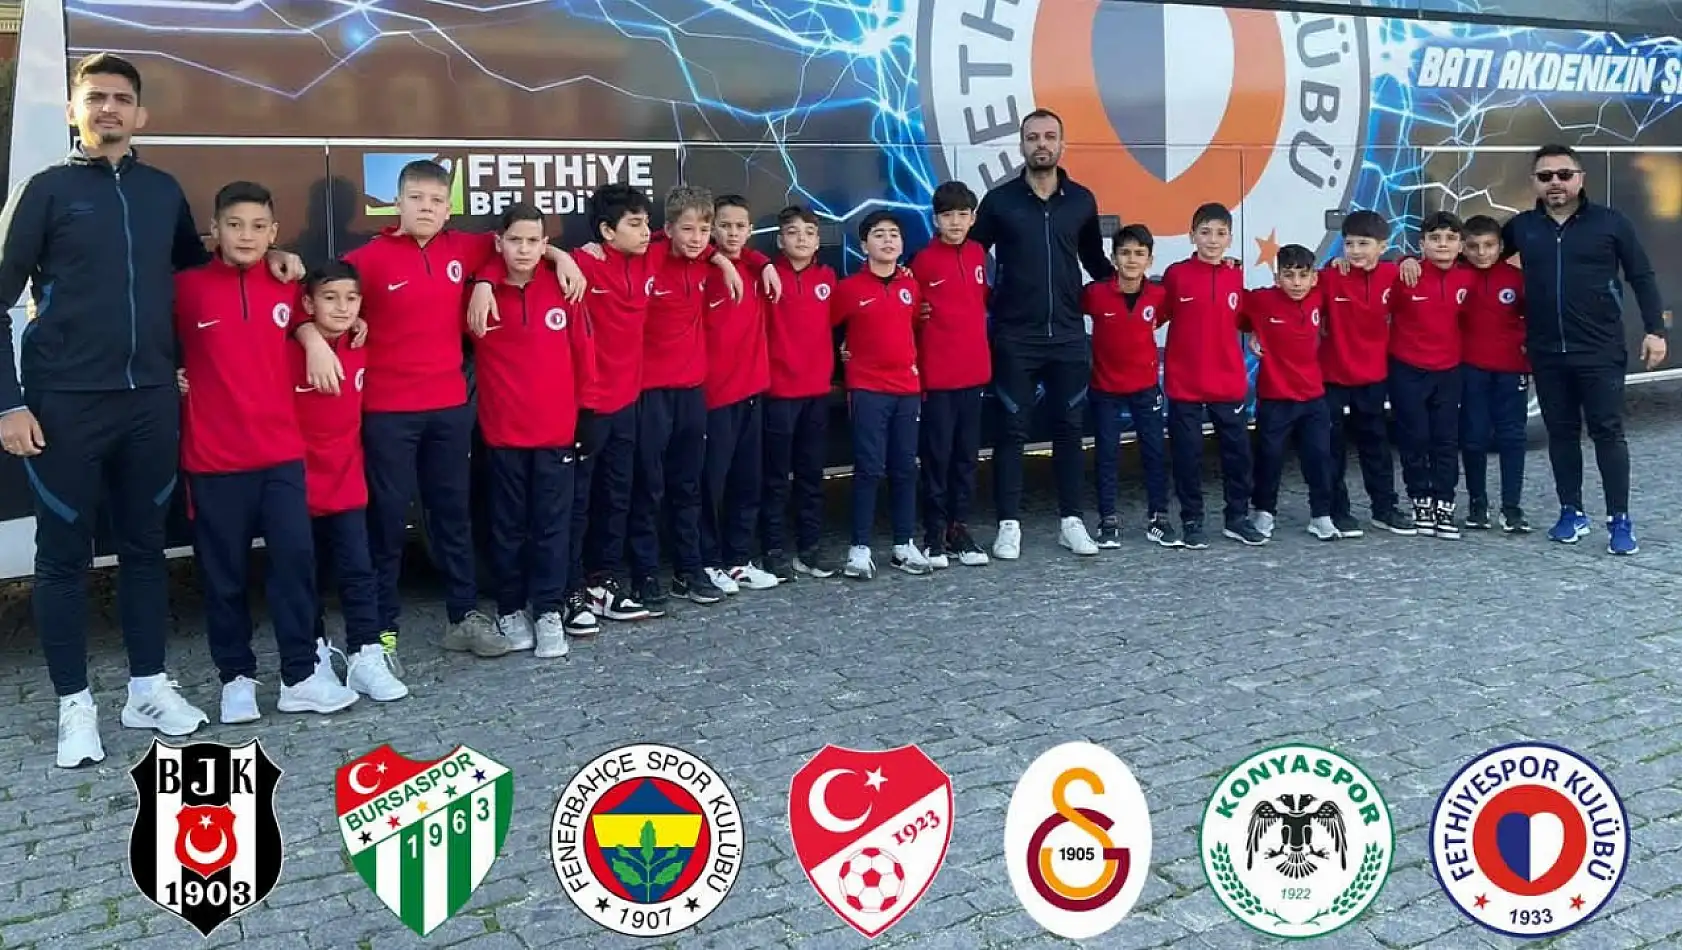 Fethiyespor Futbol Akademisi KREMLİN BD CUP U12 Turnuvasında